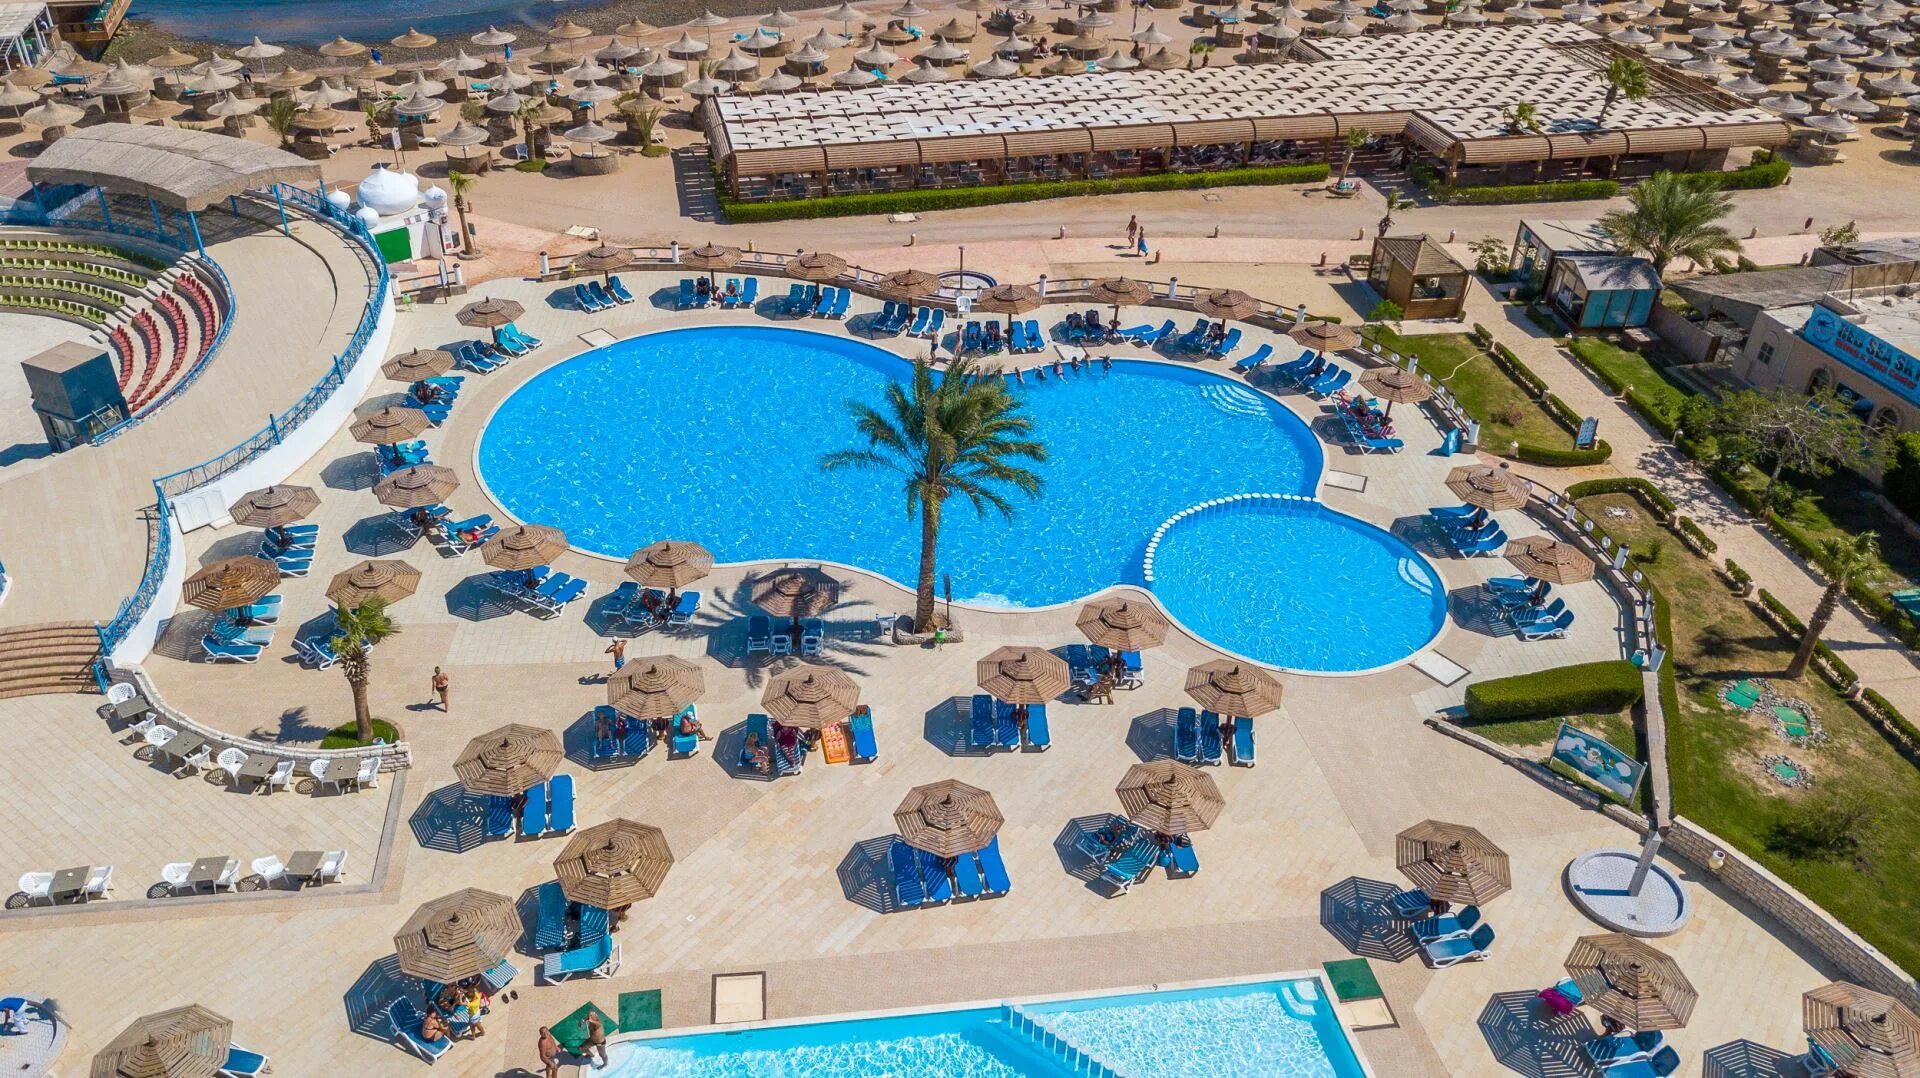 Aladdin beach hurghada 4. Отель алладин Хургада Египет. Aladdin Beach Resort Hurghada 4 Хургада. Египет алладин Бич Резорт 4. Египет отель алладин 4 Хургада.